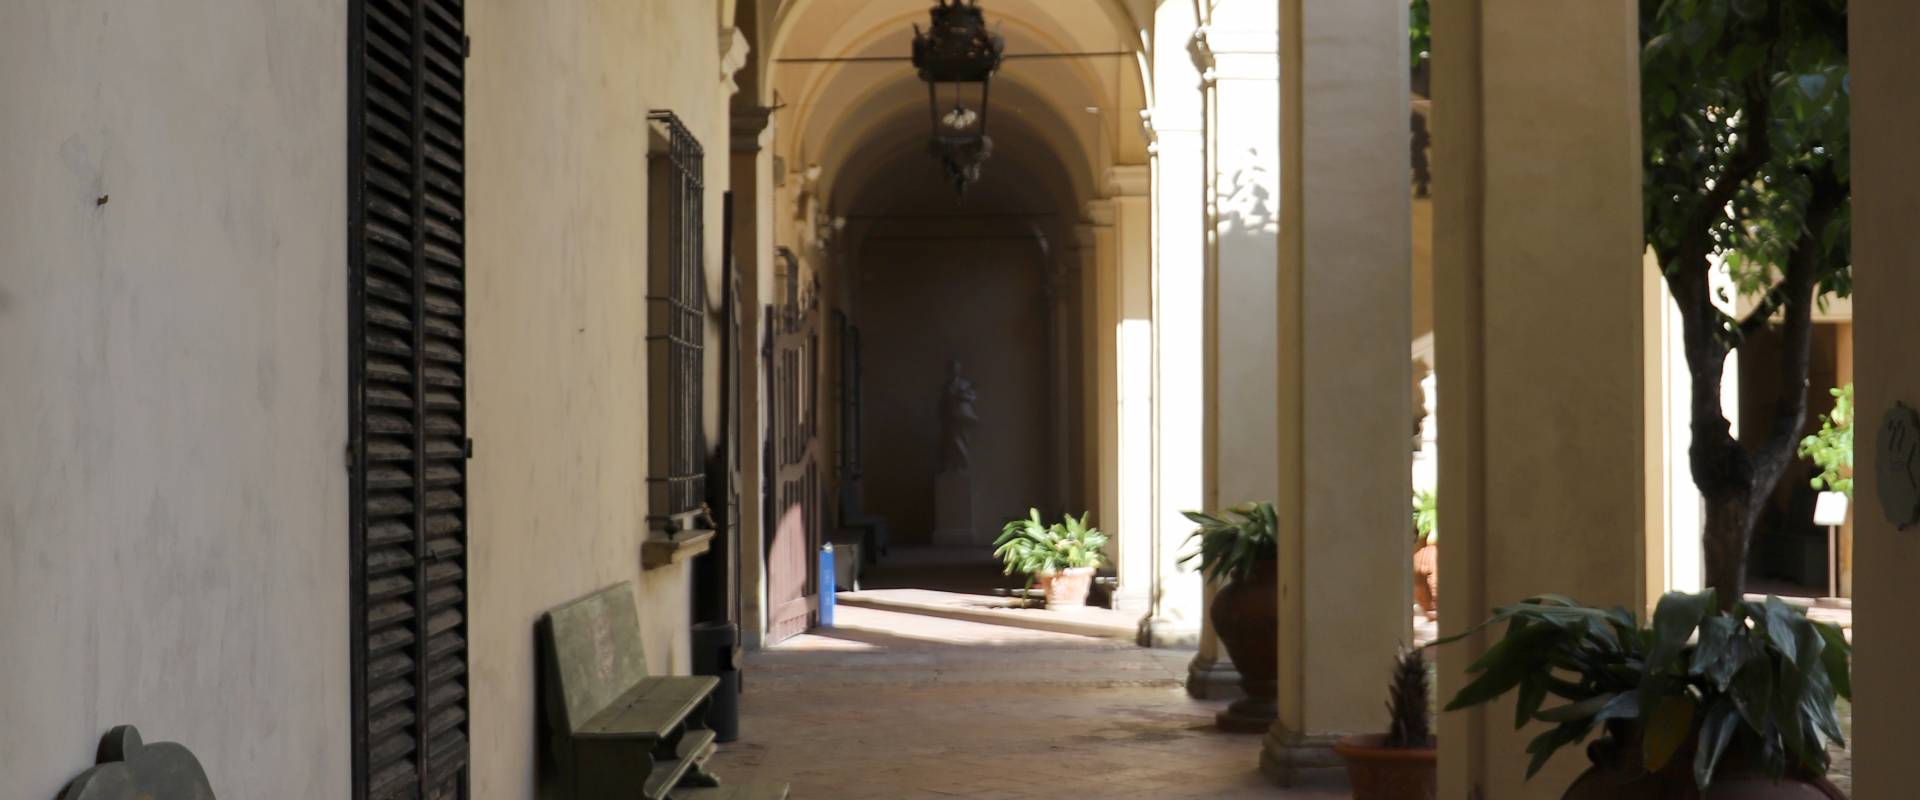 Imola, palazzo tozzoni, cortile-giardino 00 porticato photo by Sailko